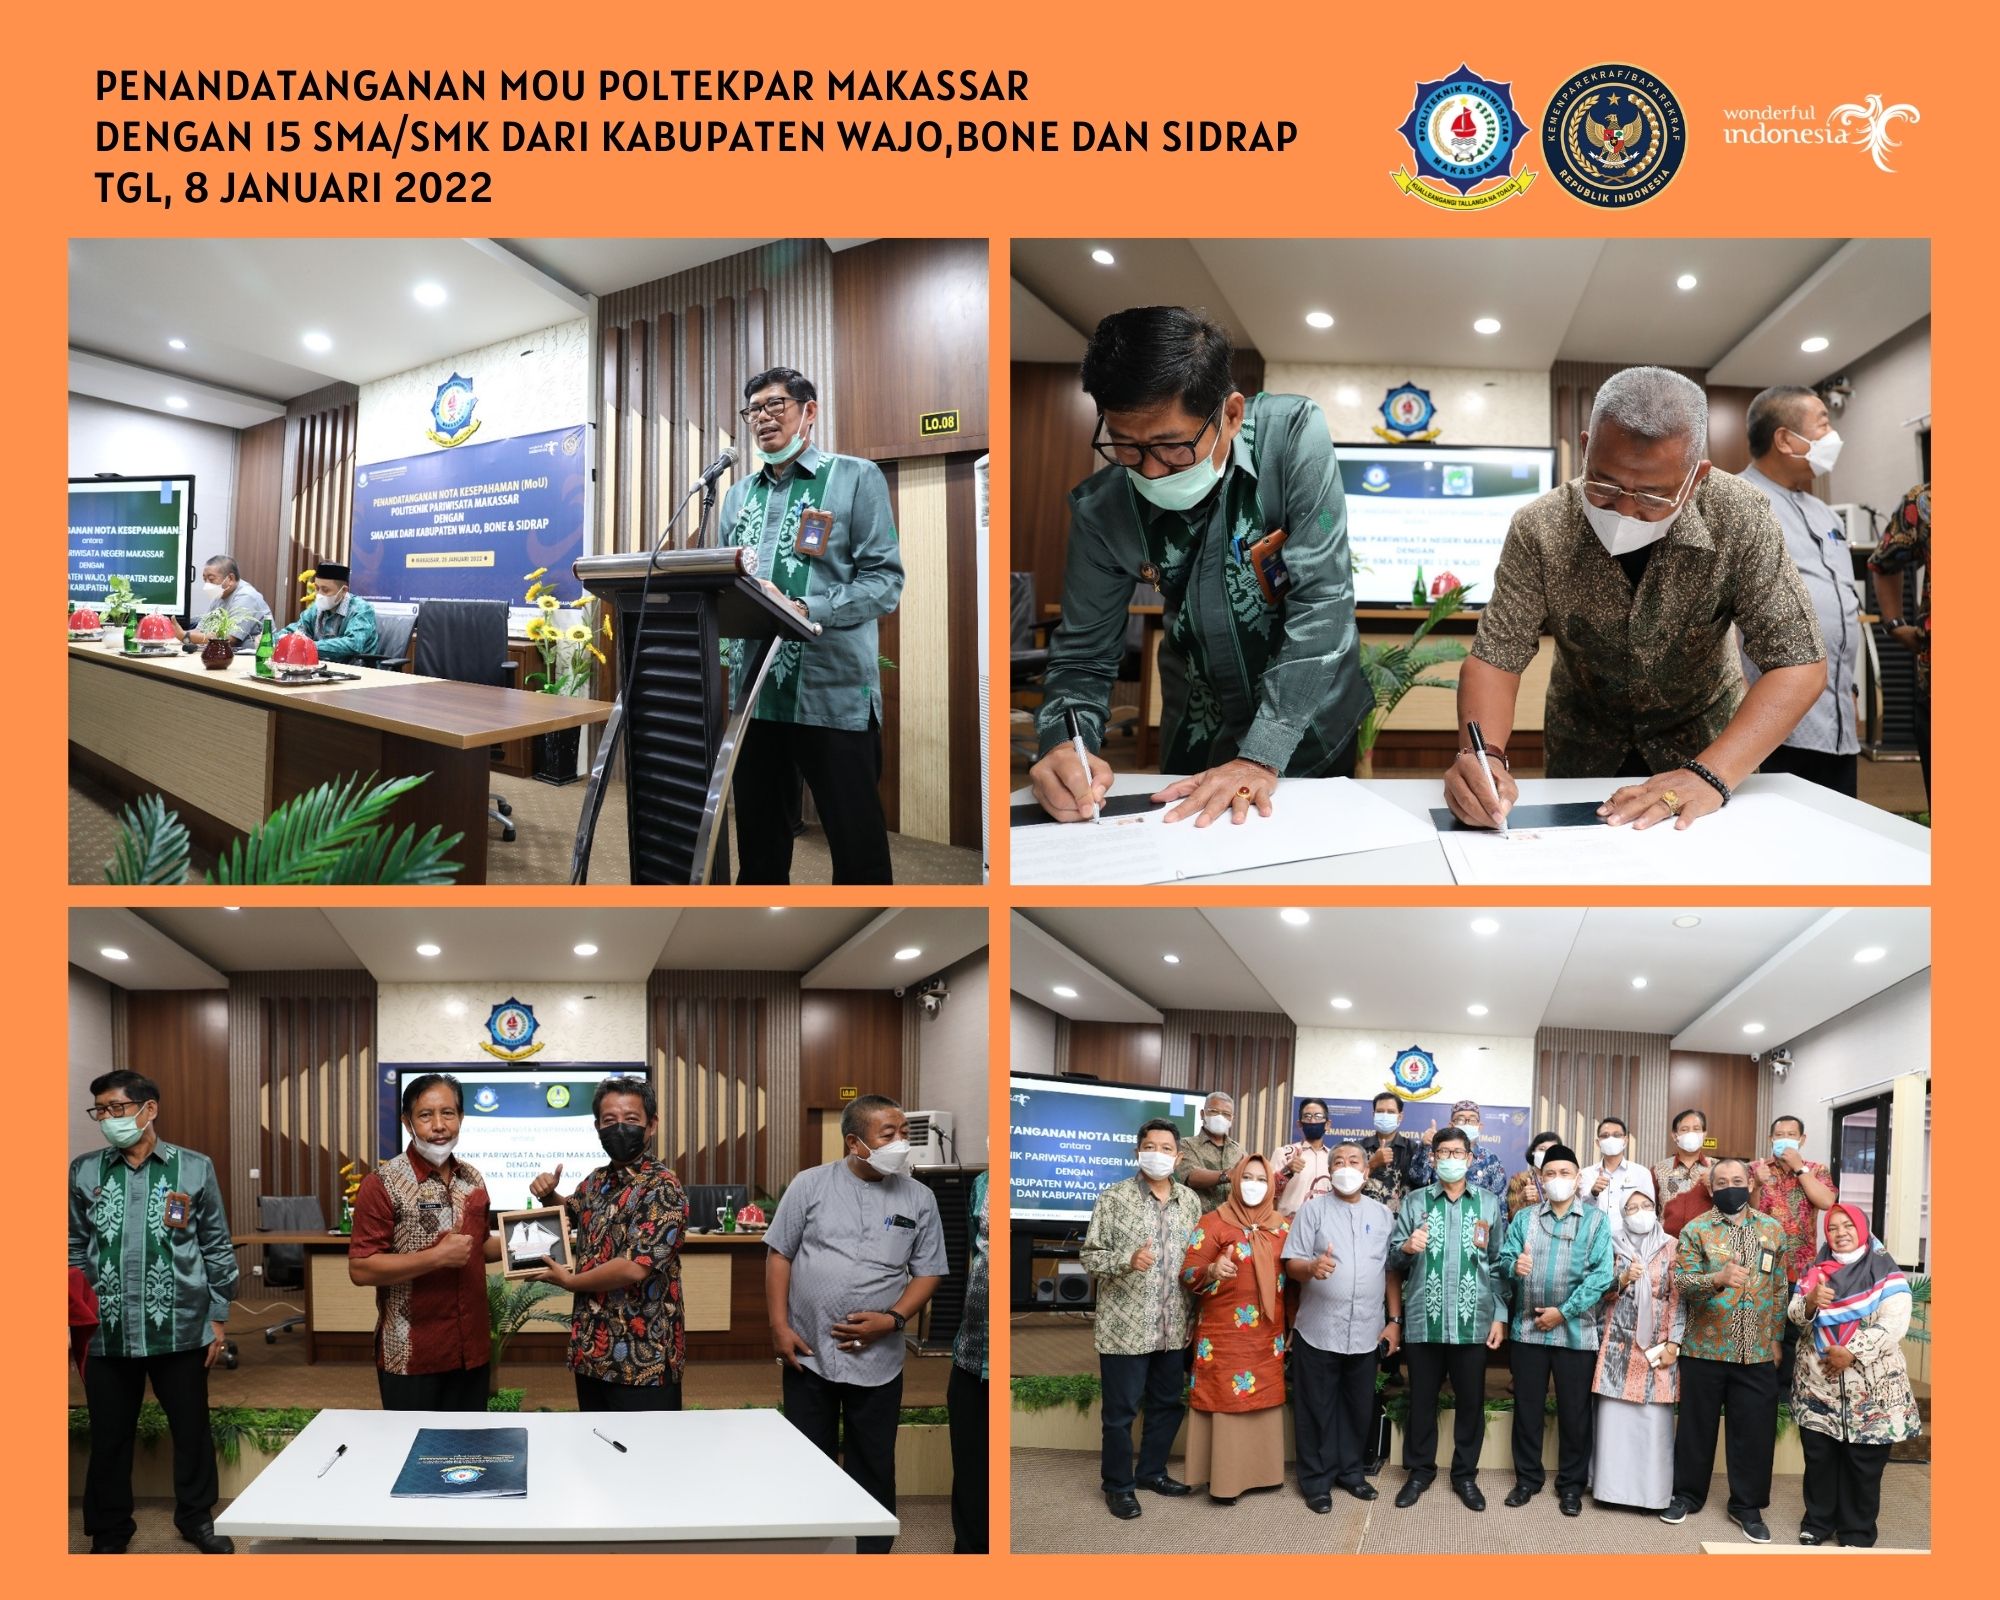 Penandatanganan Nota Kesepahaman (MoU) Politeknik Pariwisata Makassar dengan 15 SMA/SMK dari Kabupaten Wajo, Bone & Sidrap